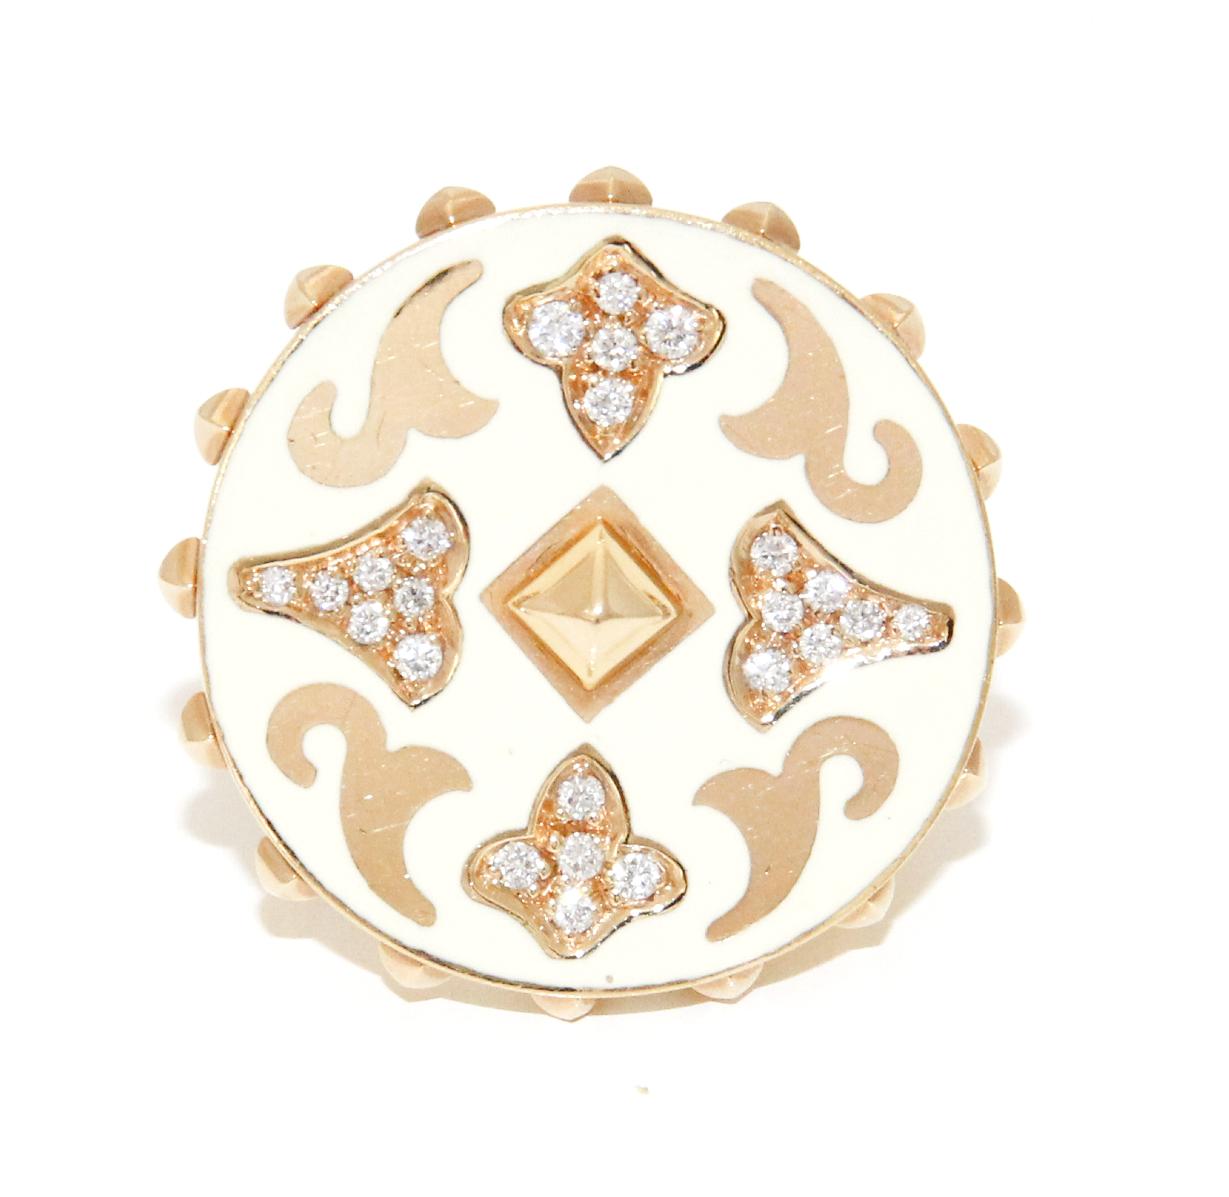 Nouvelle Bague 18K Rose Gold, Diamonds and Enamel Ring
Diamonds 0.32ctw
Size 7
Retail $9,250.00